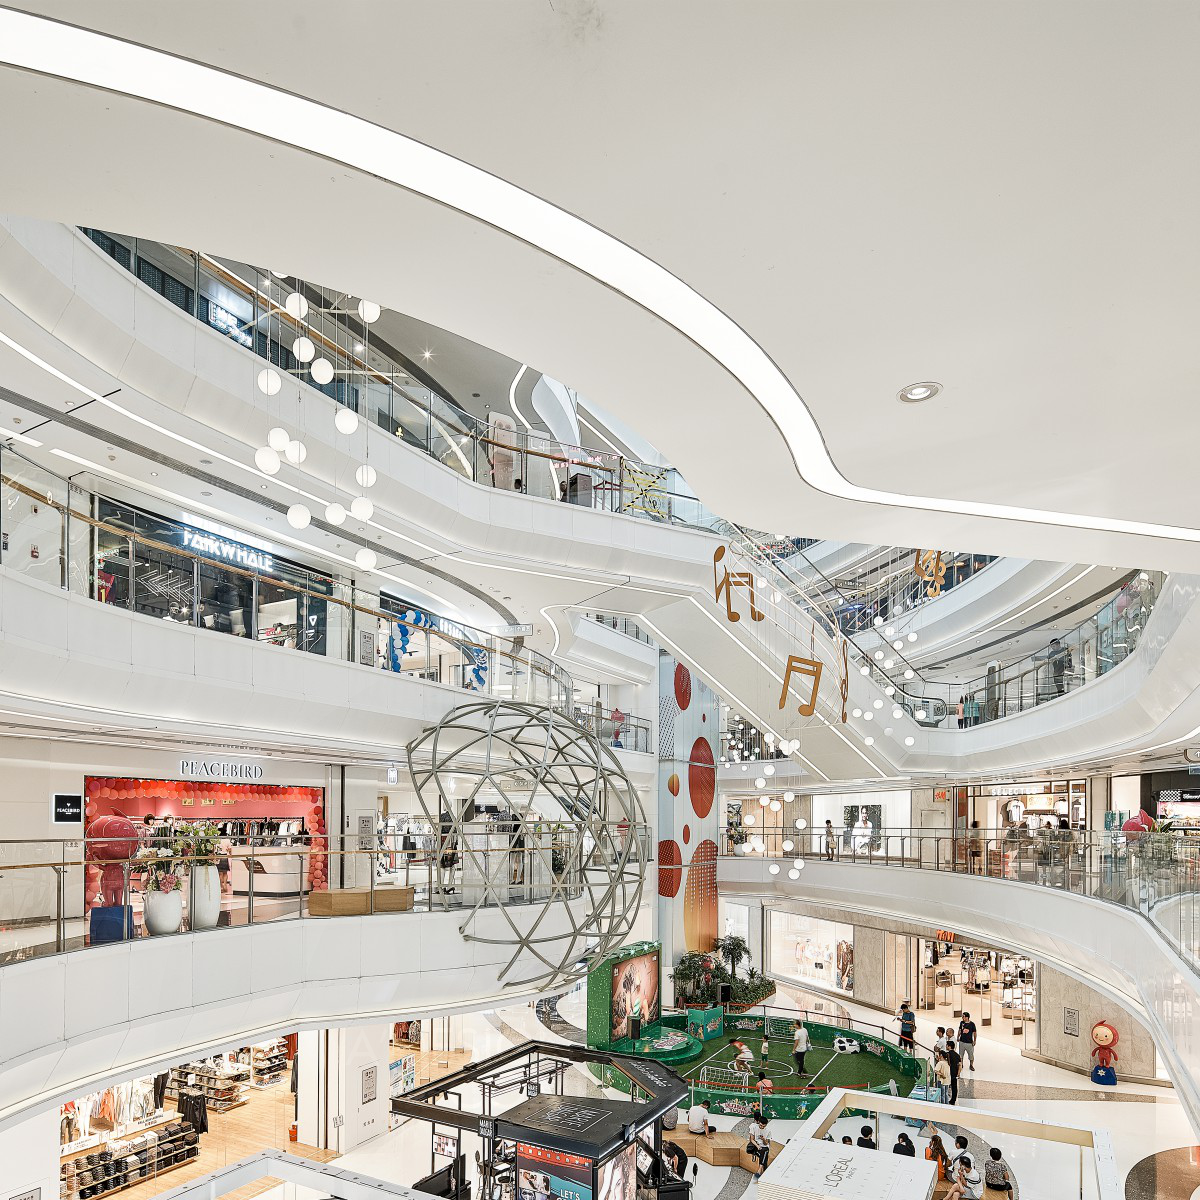 Xintian 360 Plaza - Morgan Mall Shopping Mall by MAS inc. Golden Interior Space and Exhibition Design Award Winner 2019 